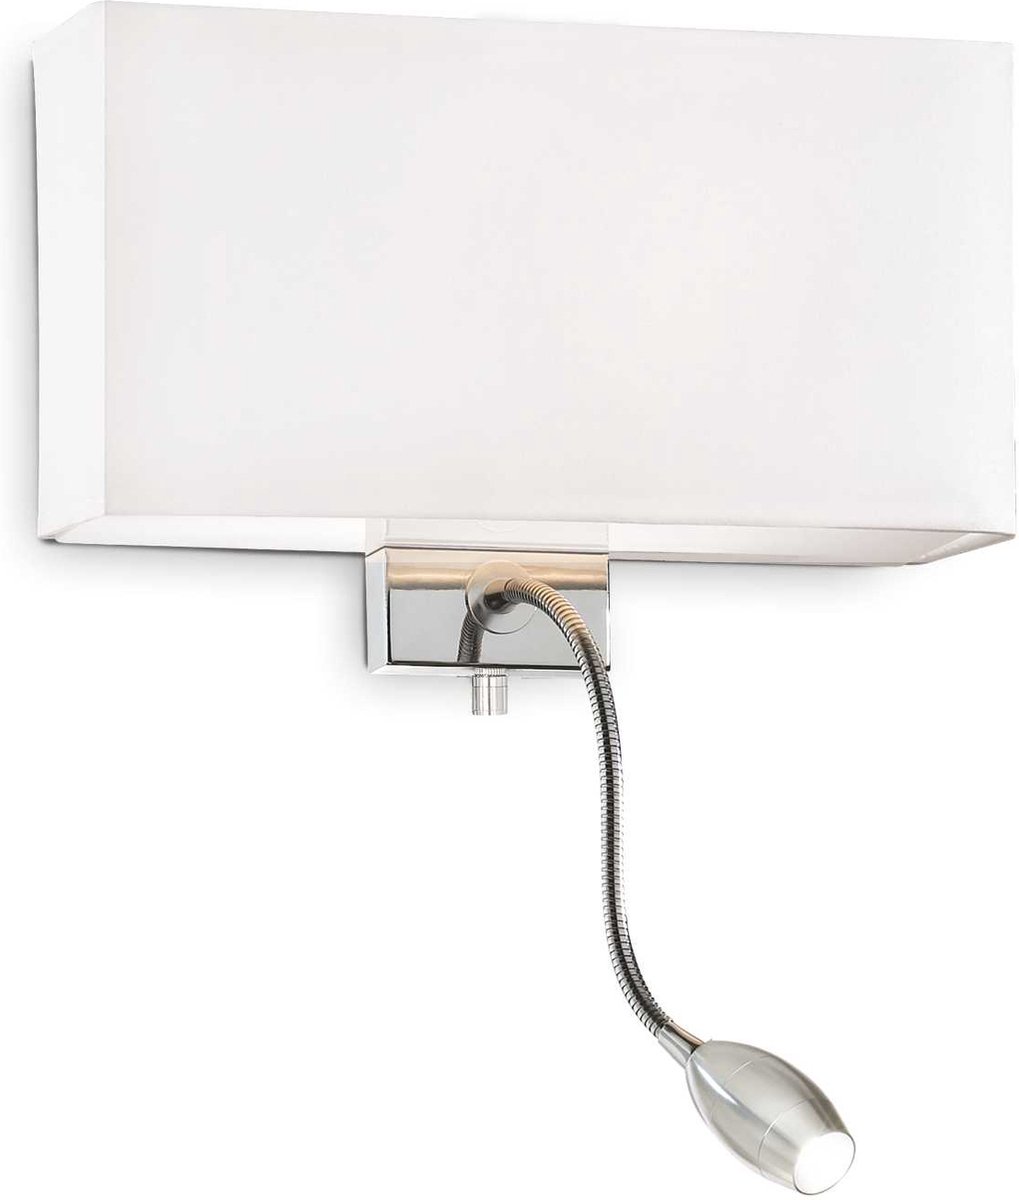 Ideal Your Lux - Wandlamp Modern - Metaal - E27/LED - Voor Binnen - Lamp - Lampen - Woonkamer - Eetkamer - Slaapkamer - Chroom